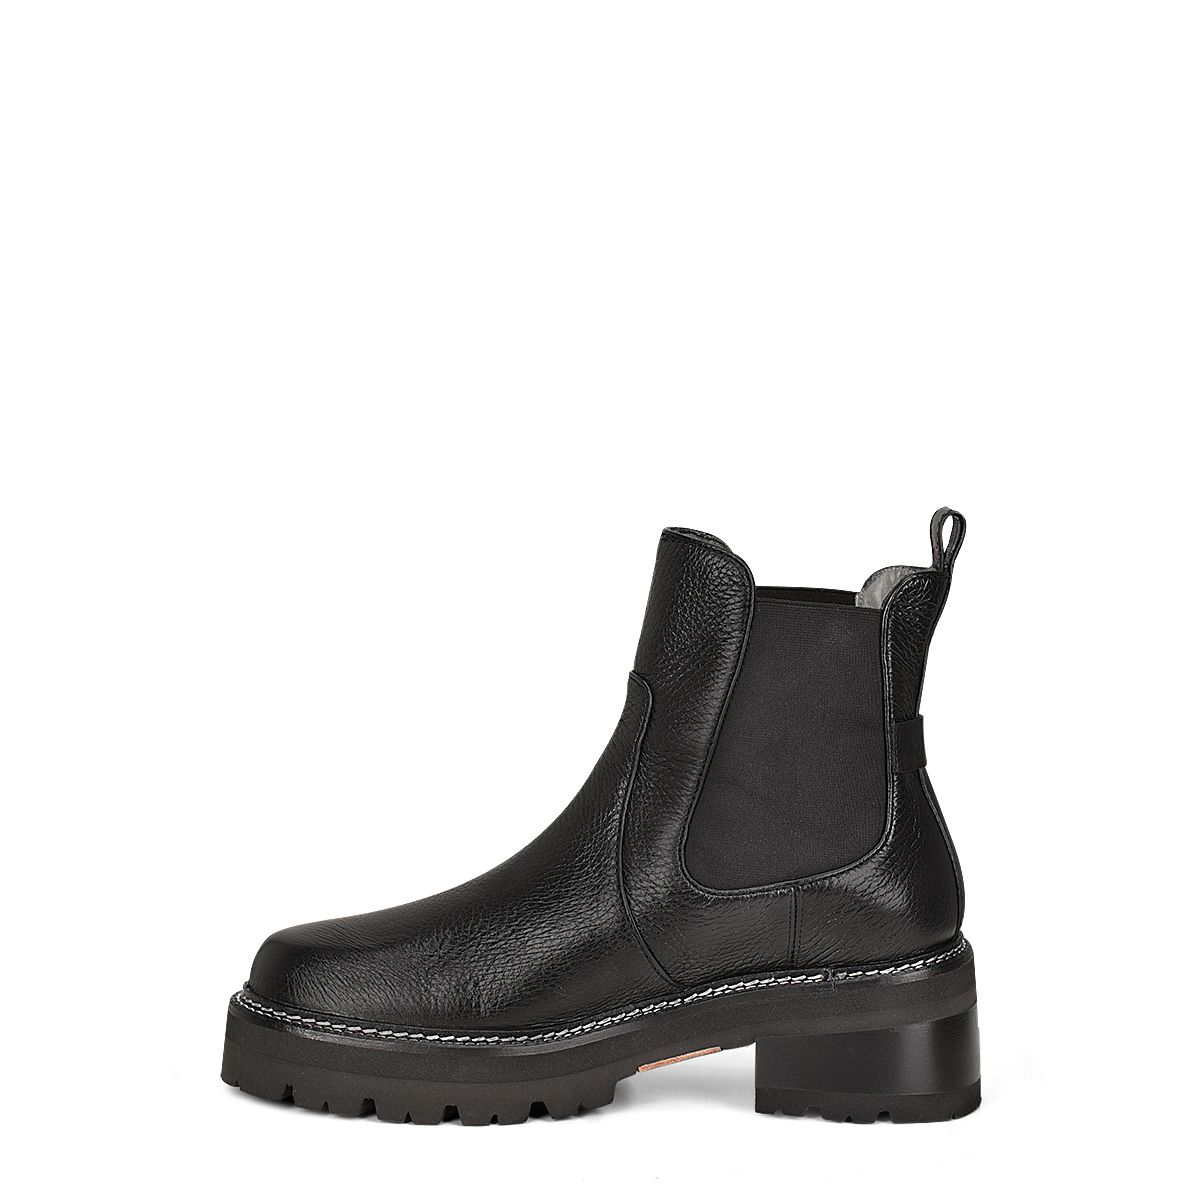 41WVNTS - Cuadra black casual fashion deer leather ankle boots for women-CUADRA-Kuet-Cuadra-Boots